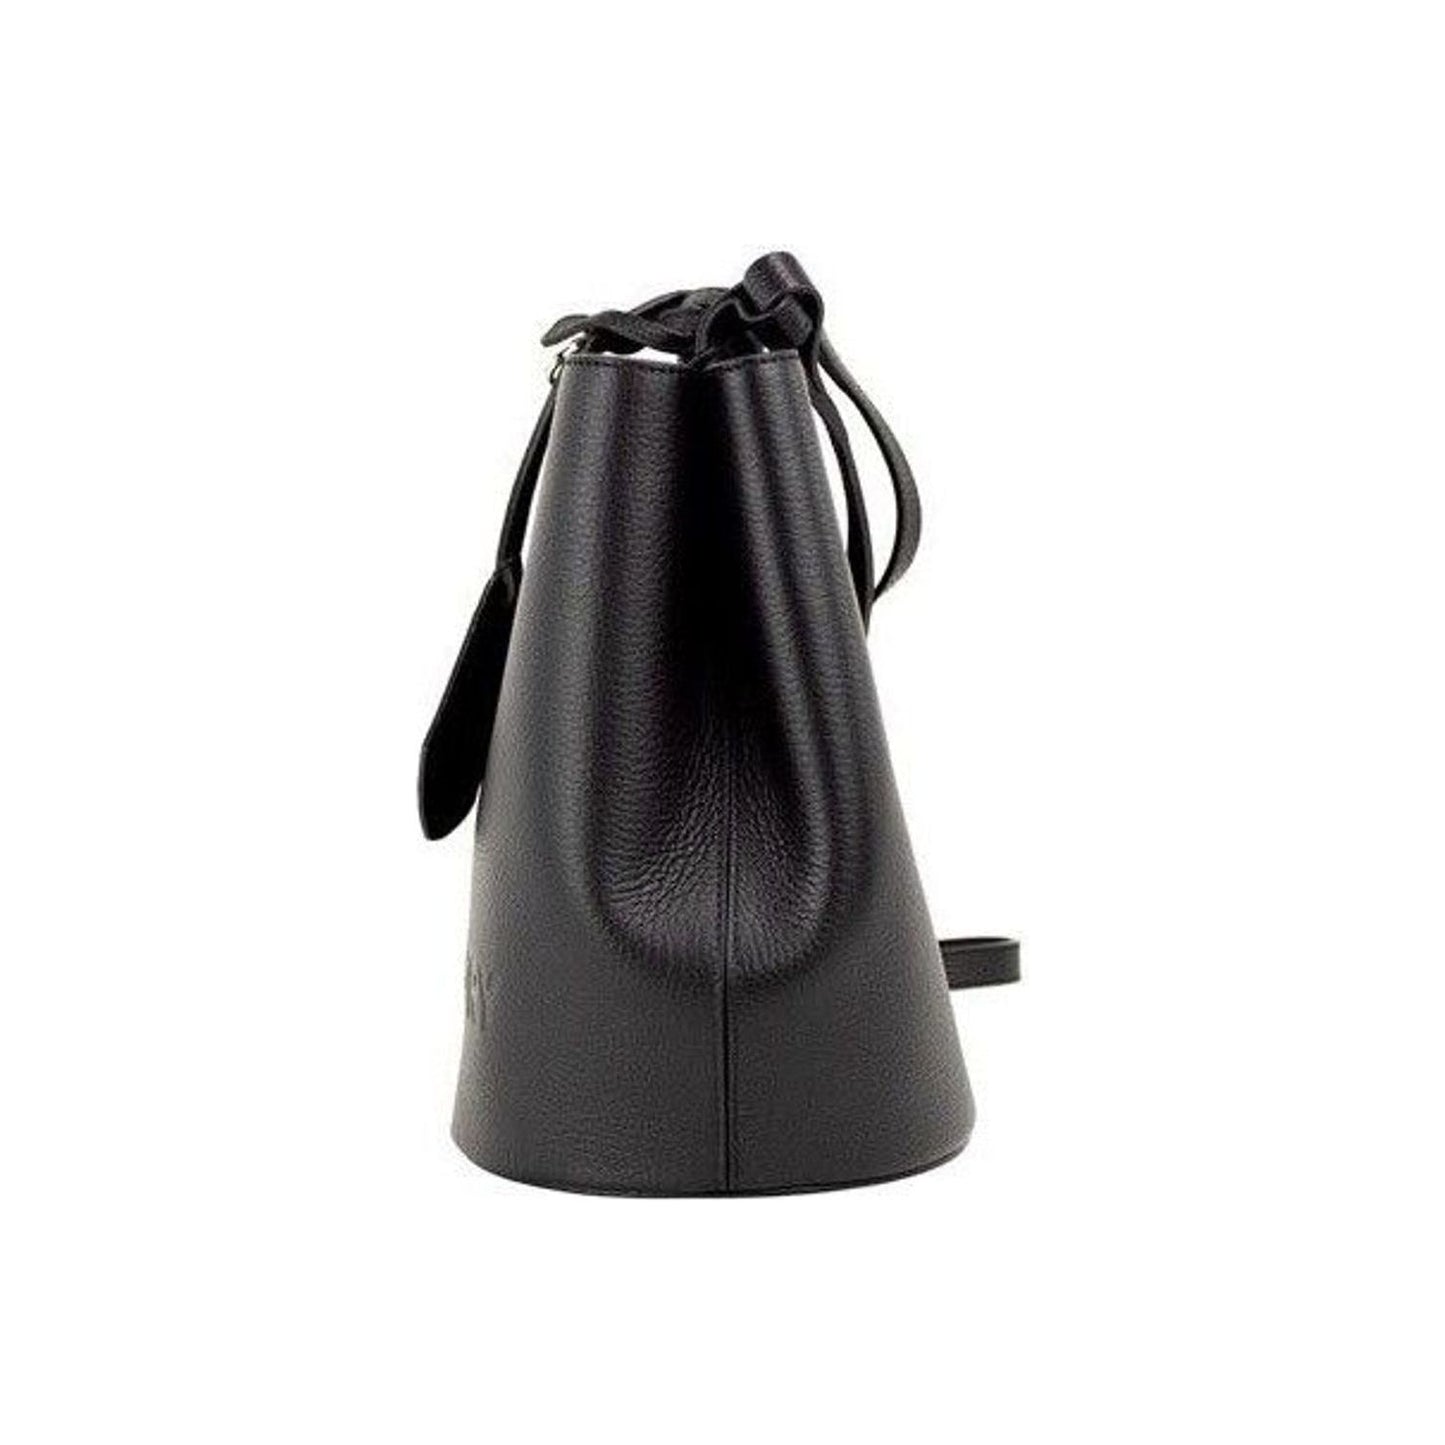 BurberryLorne Small Black Pebbled Leather Bucket Crossbody Handbag PurseMcRichard Designer Brands£1089.00